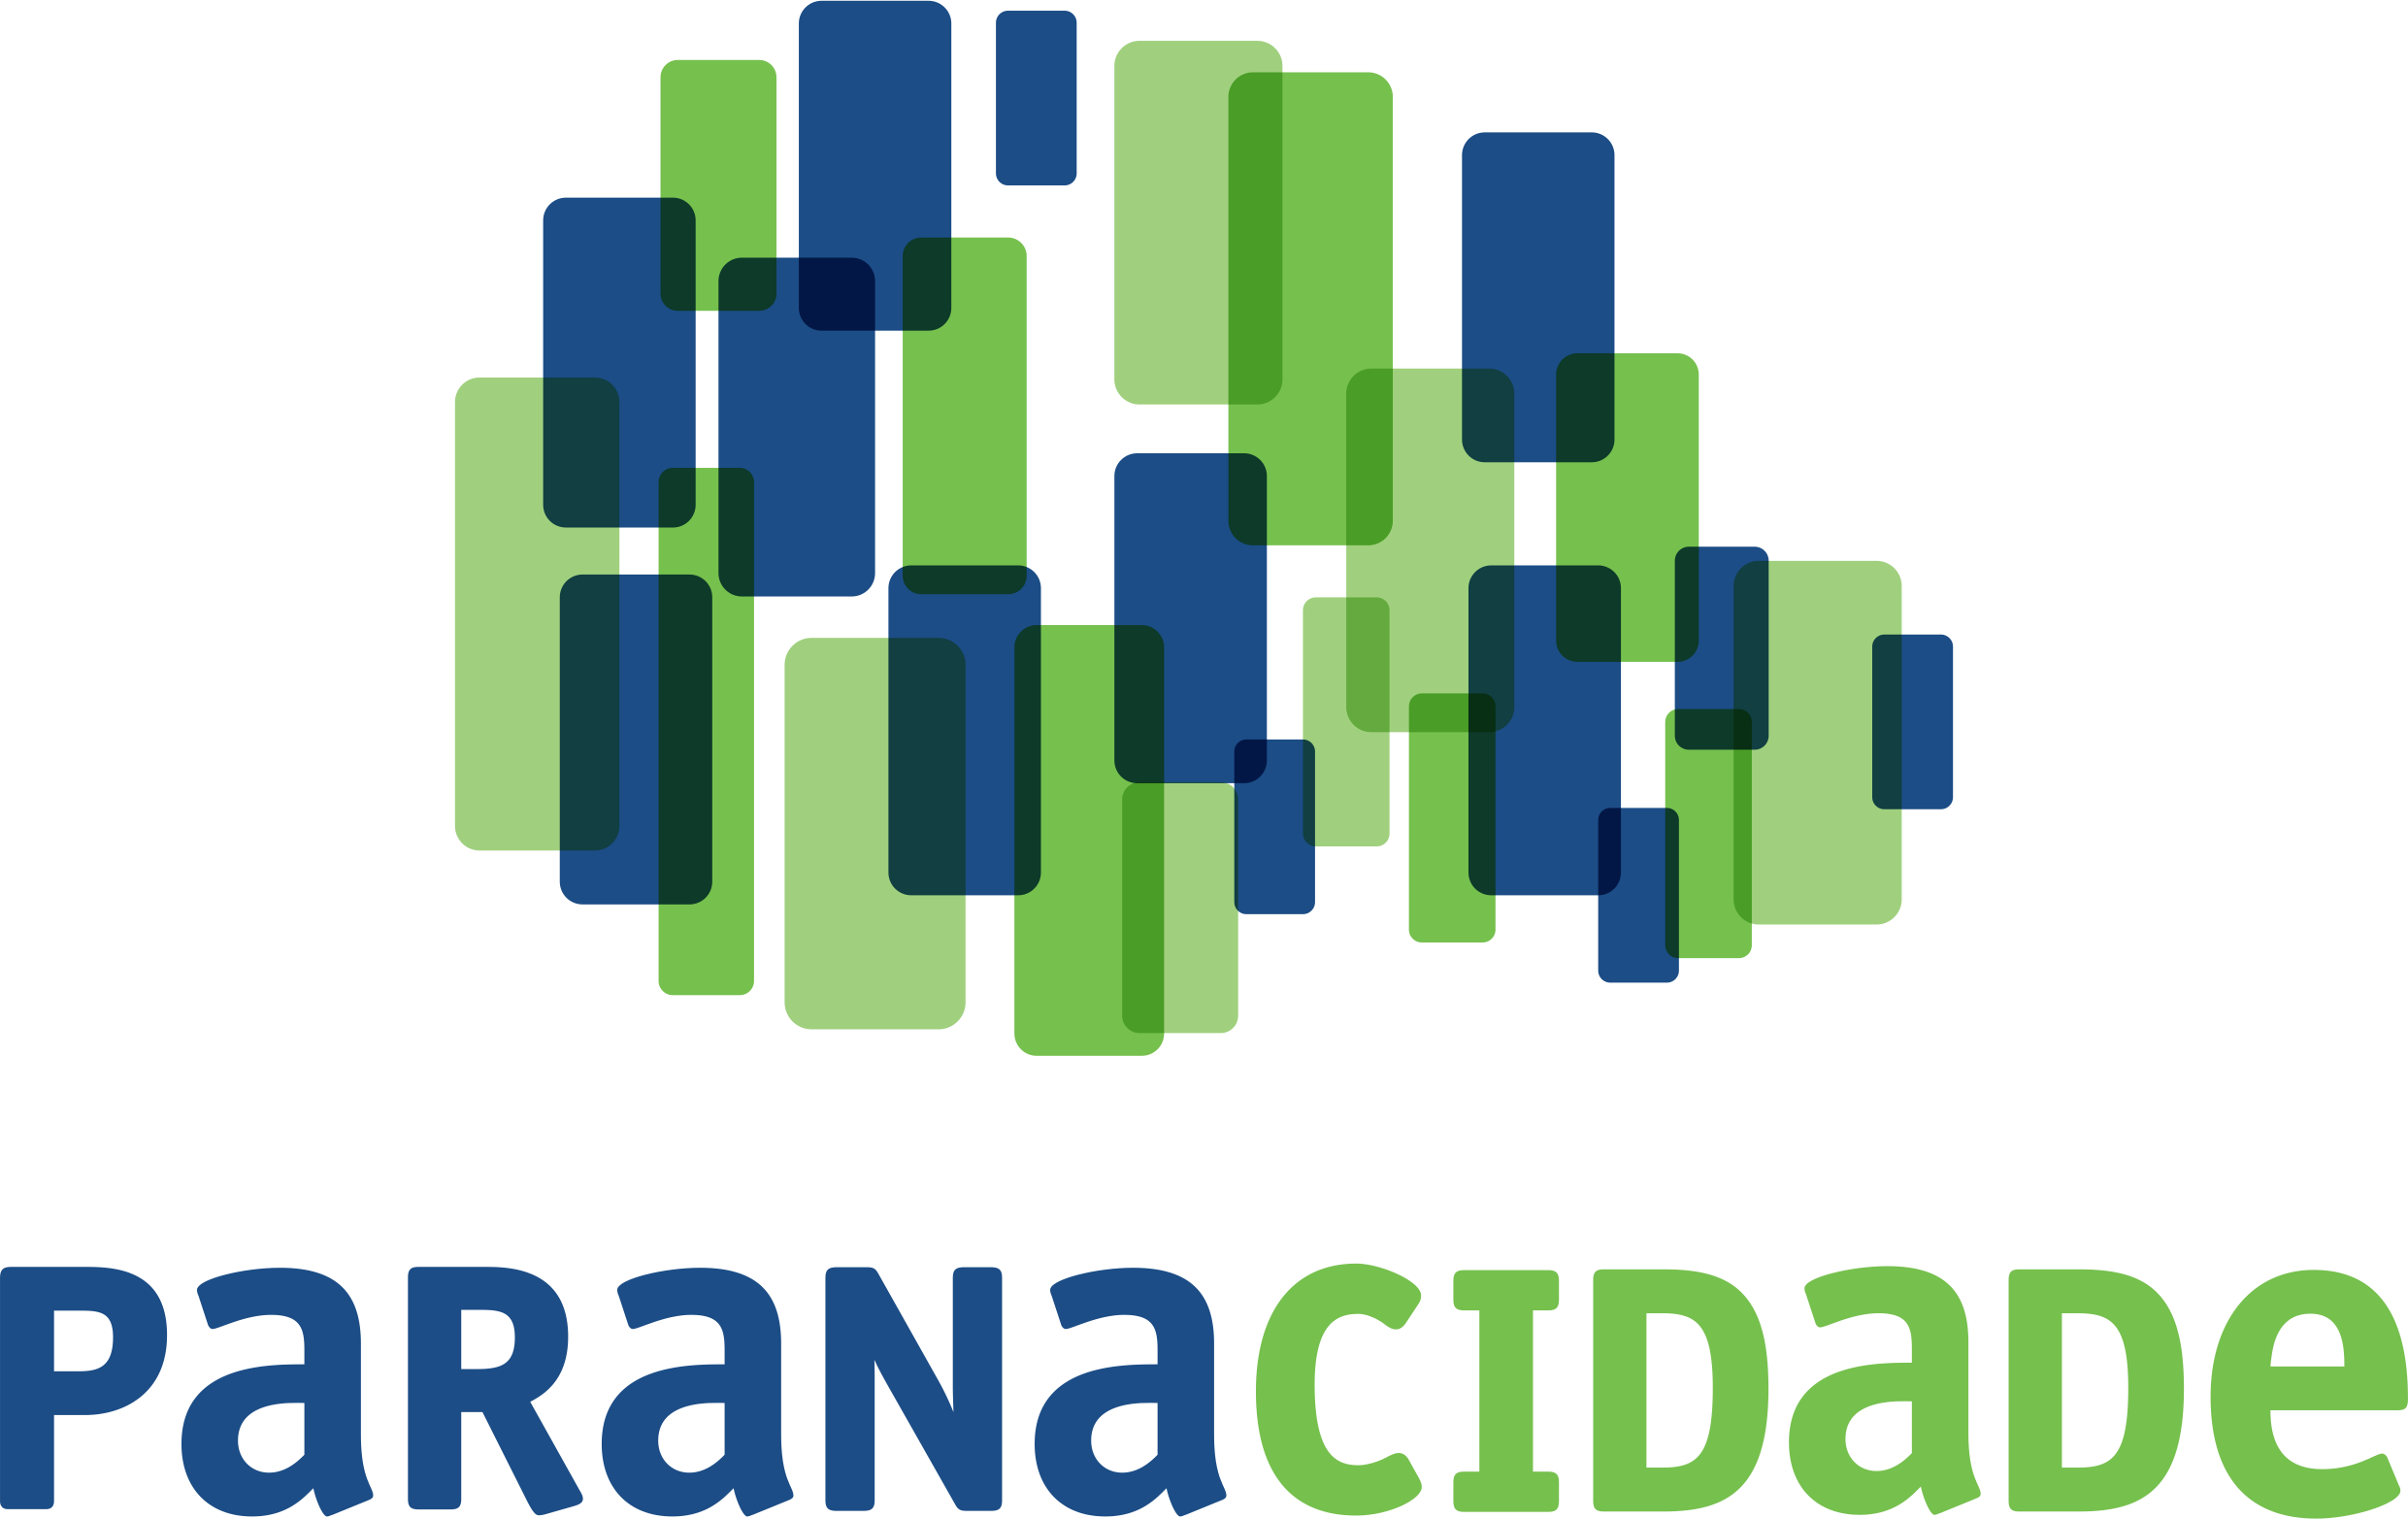 Logomarca PARANACIDADE